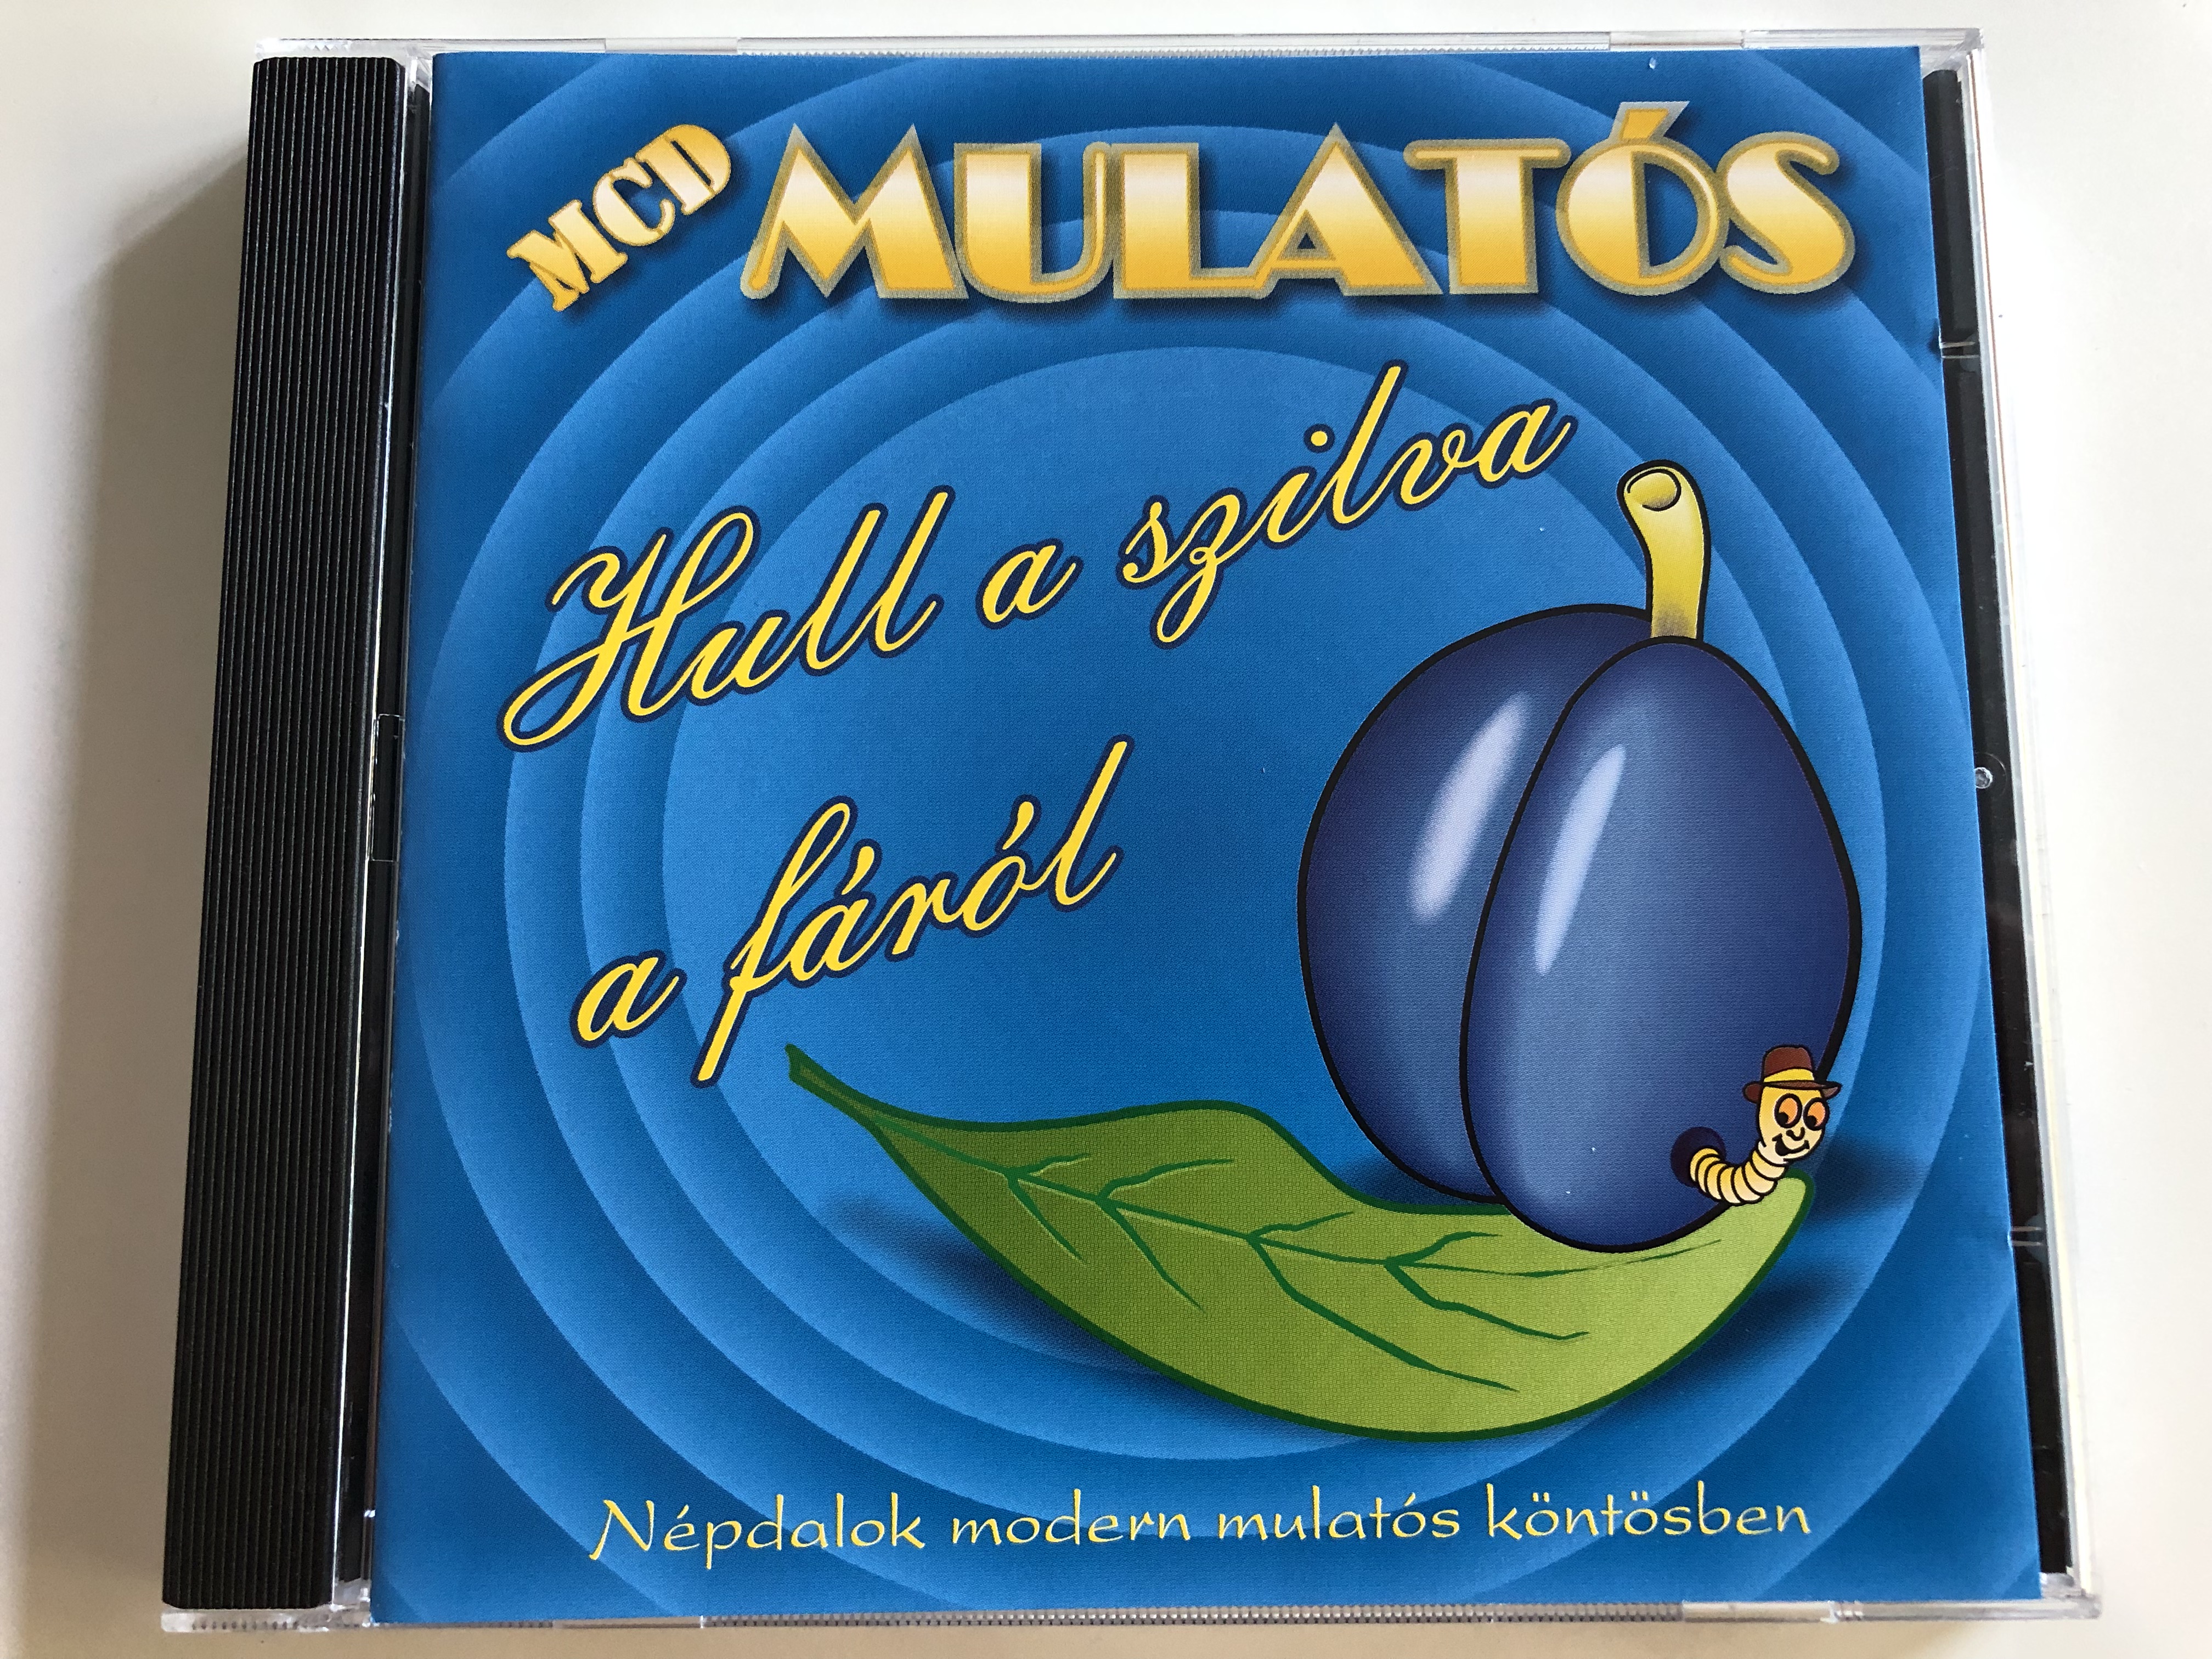 -mcd-mulat-s-hull-a-szilva-a-f-r-l-n-pdalok-modern-mulat-s-k-nt-sben-audio-cd-2006-musicdome-0542mcd-hungarian-folk-party-songs-in-modern-style-1-.jpg